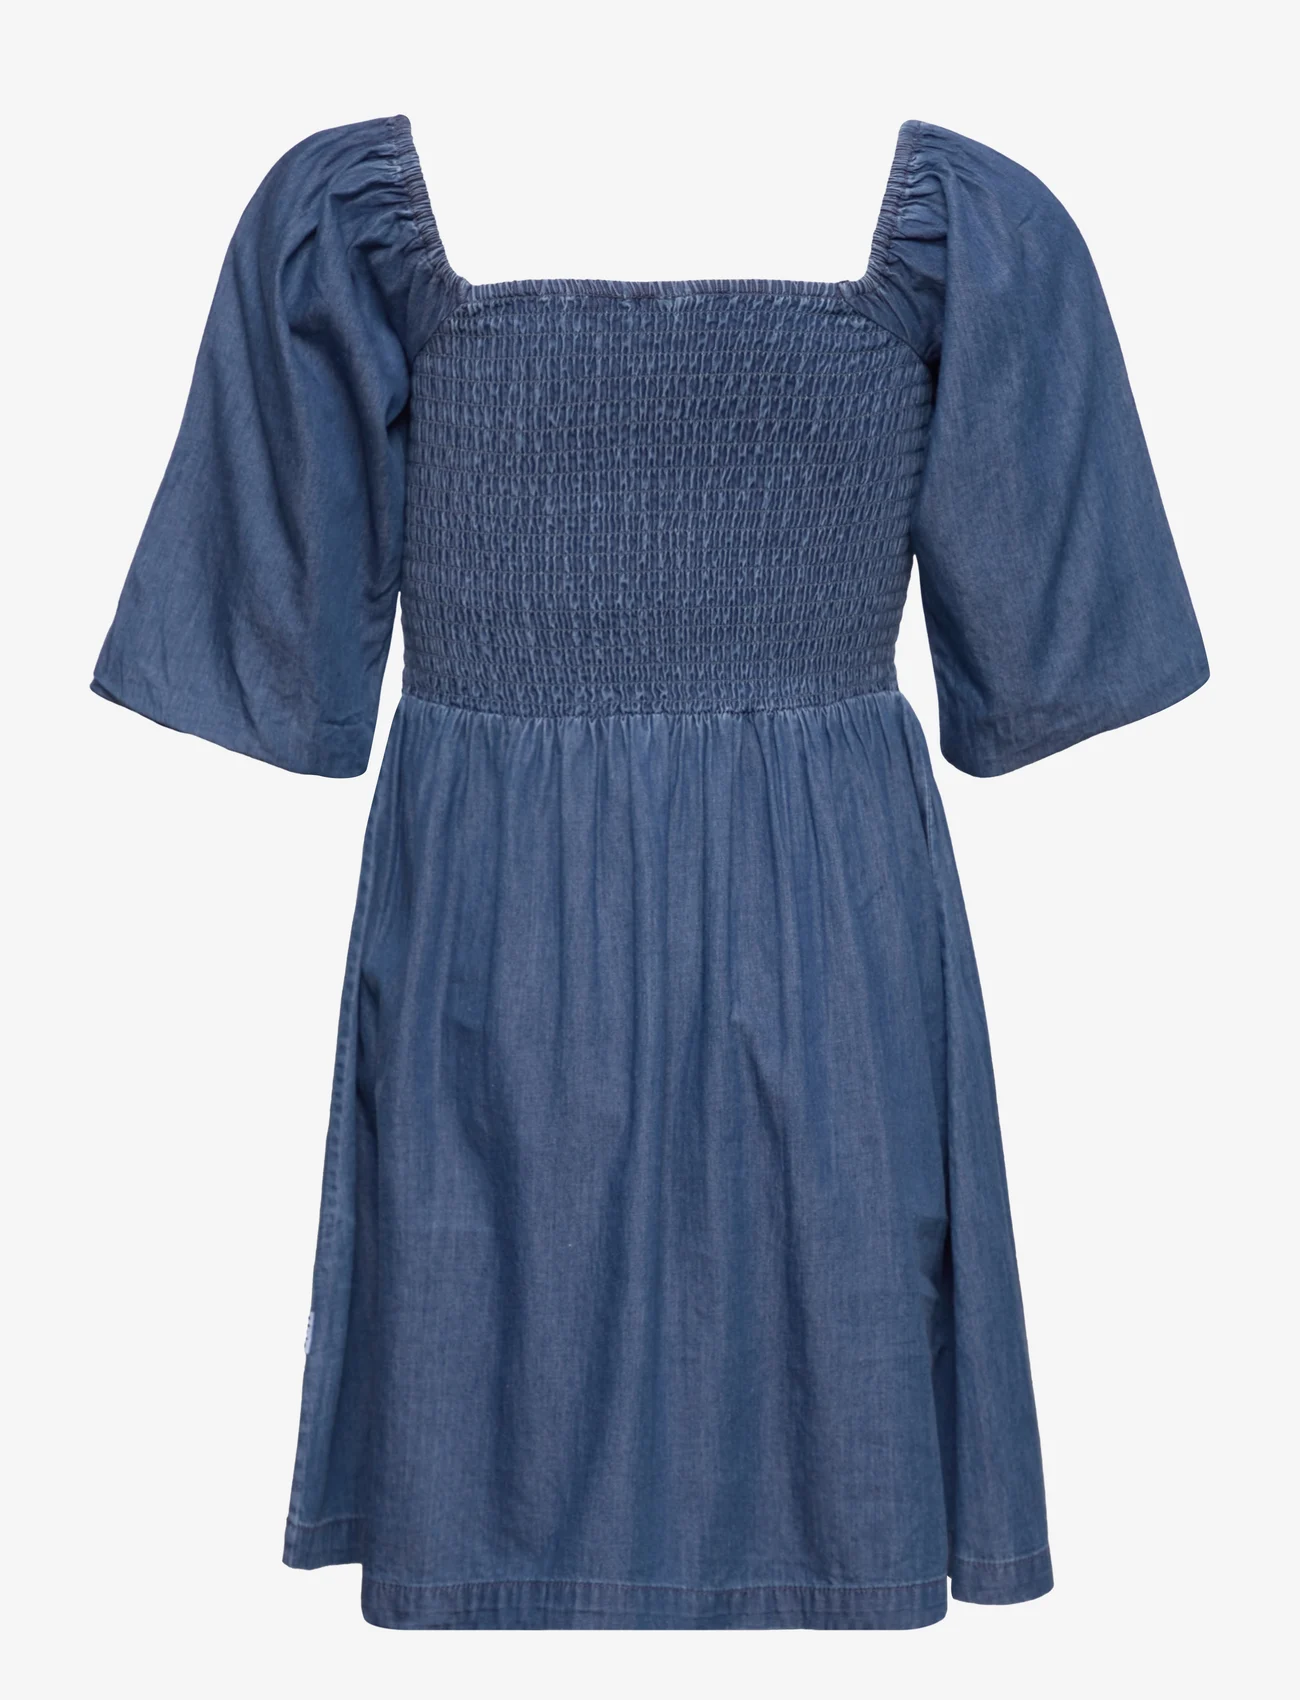 Molo - Cherisa - short-sleeved casual dresses - washed chambrey - 1